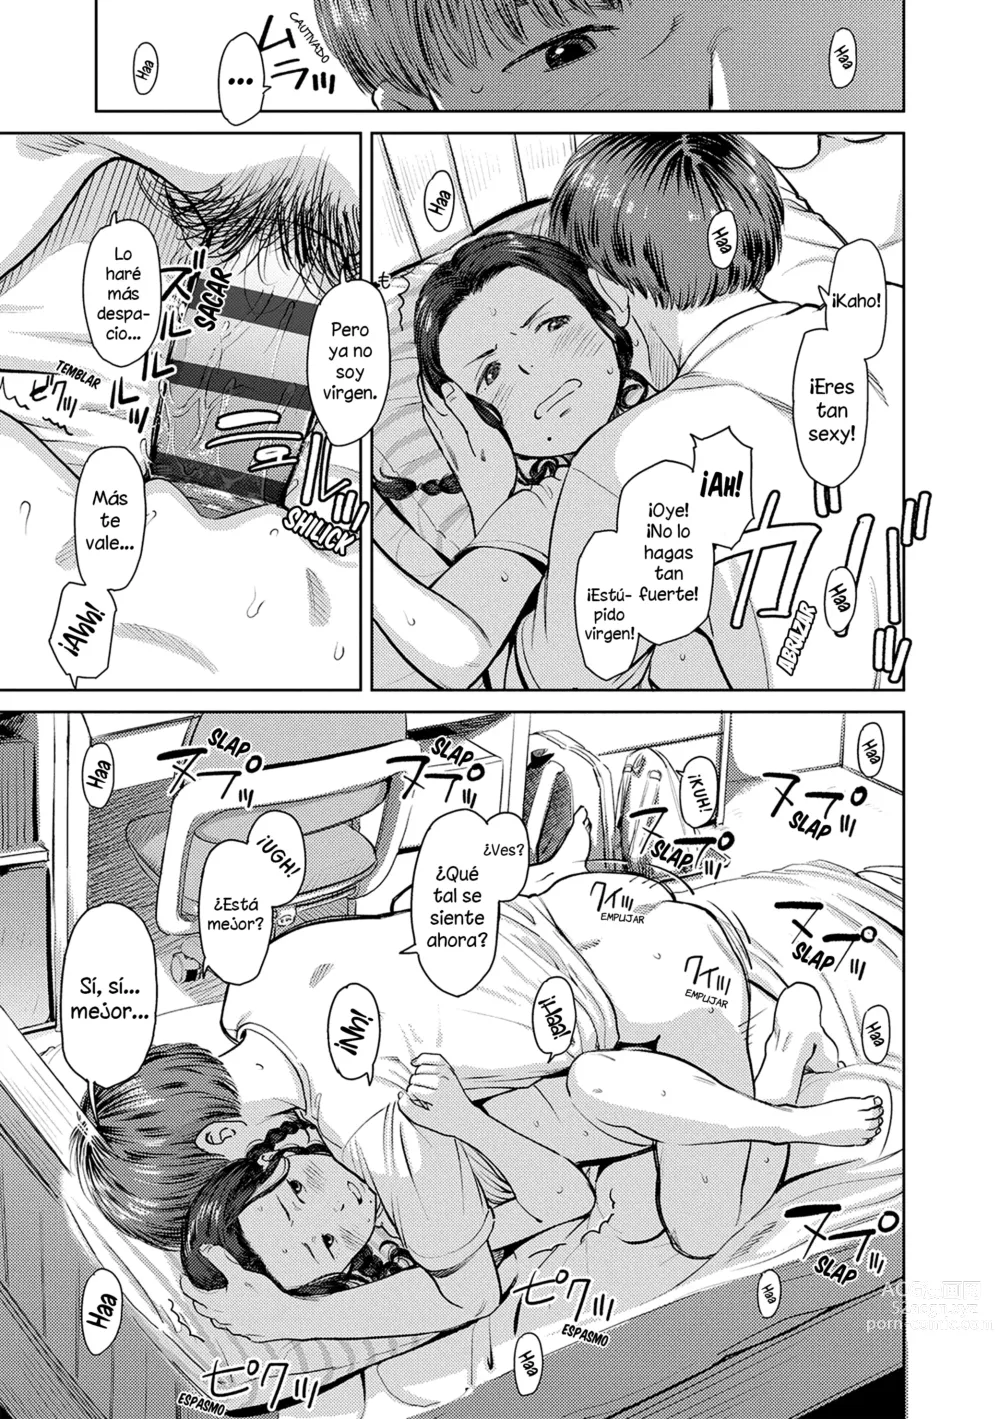 Page 27 of manga Bienvenido a casa